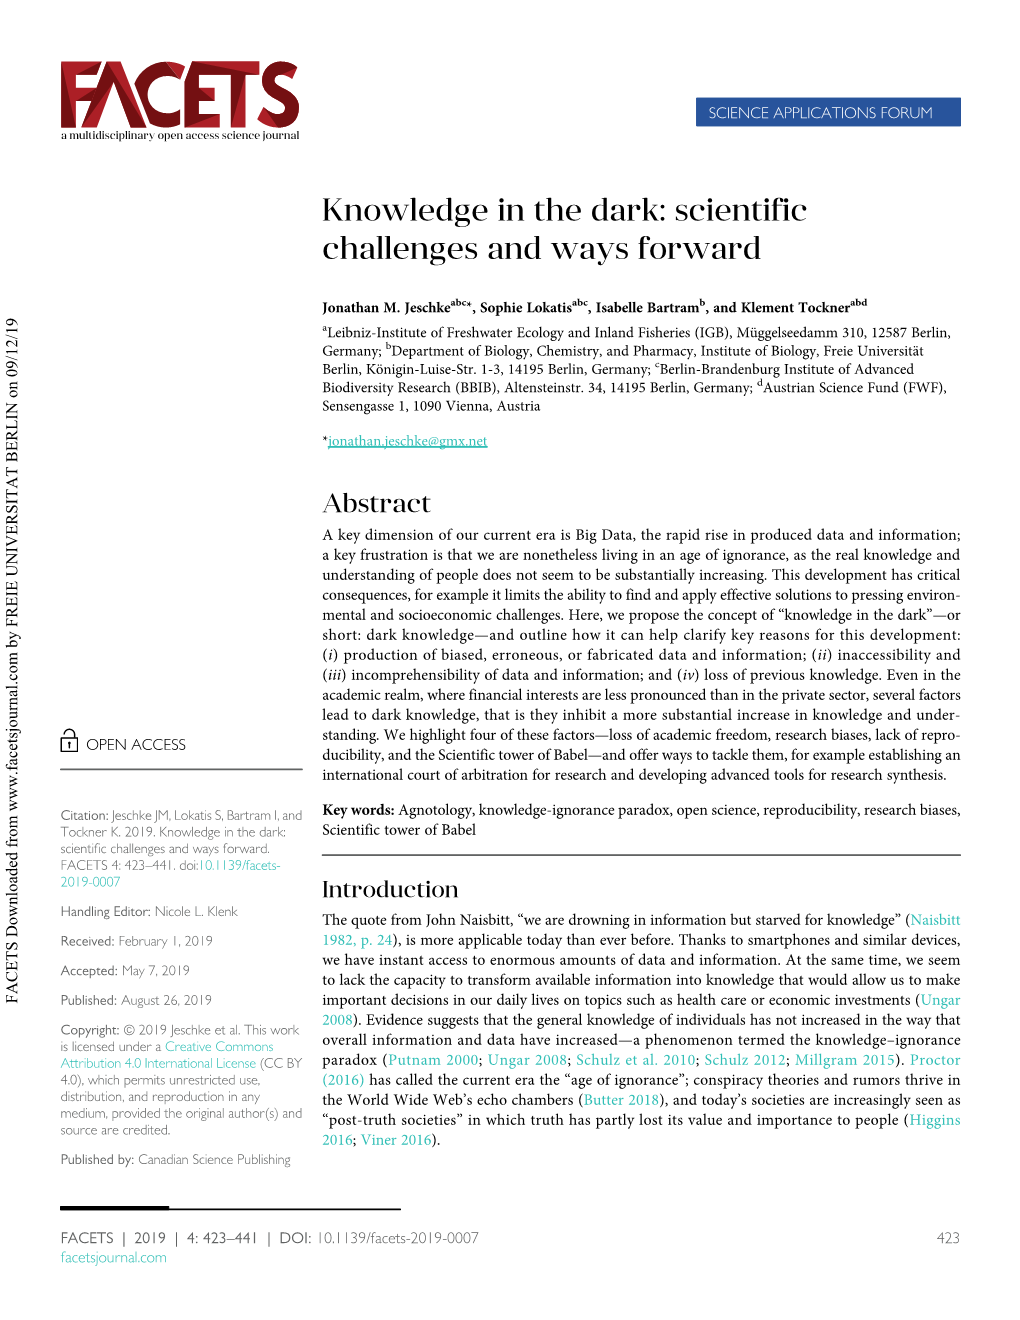 Knowledge in the Dark: Scientific Challenges and Ways Forward